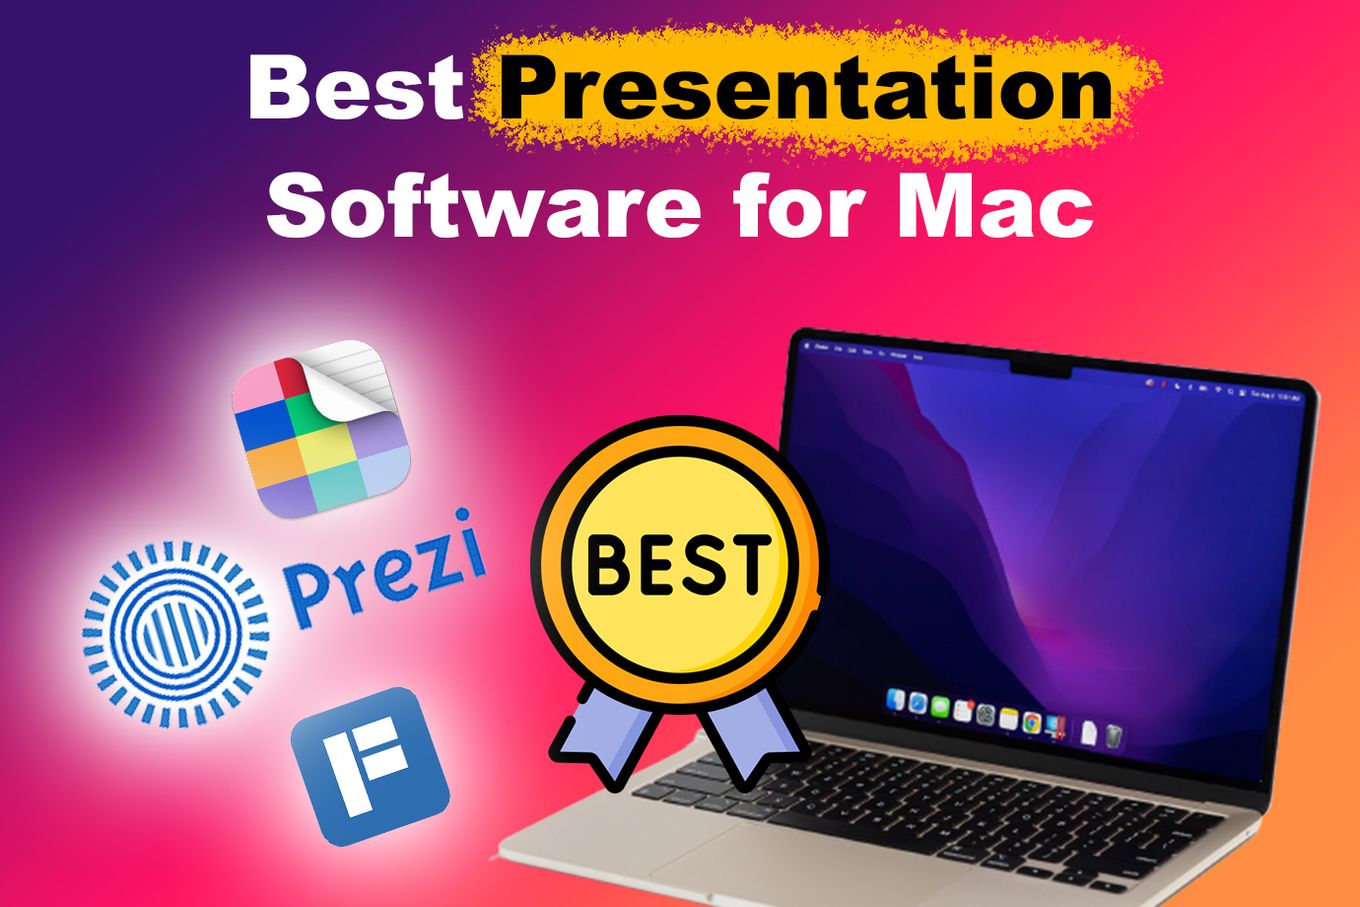 Presentation Software for Mac